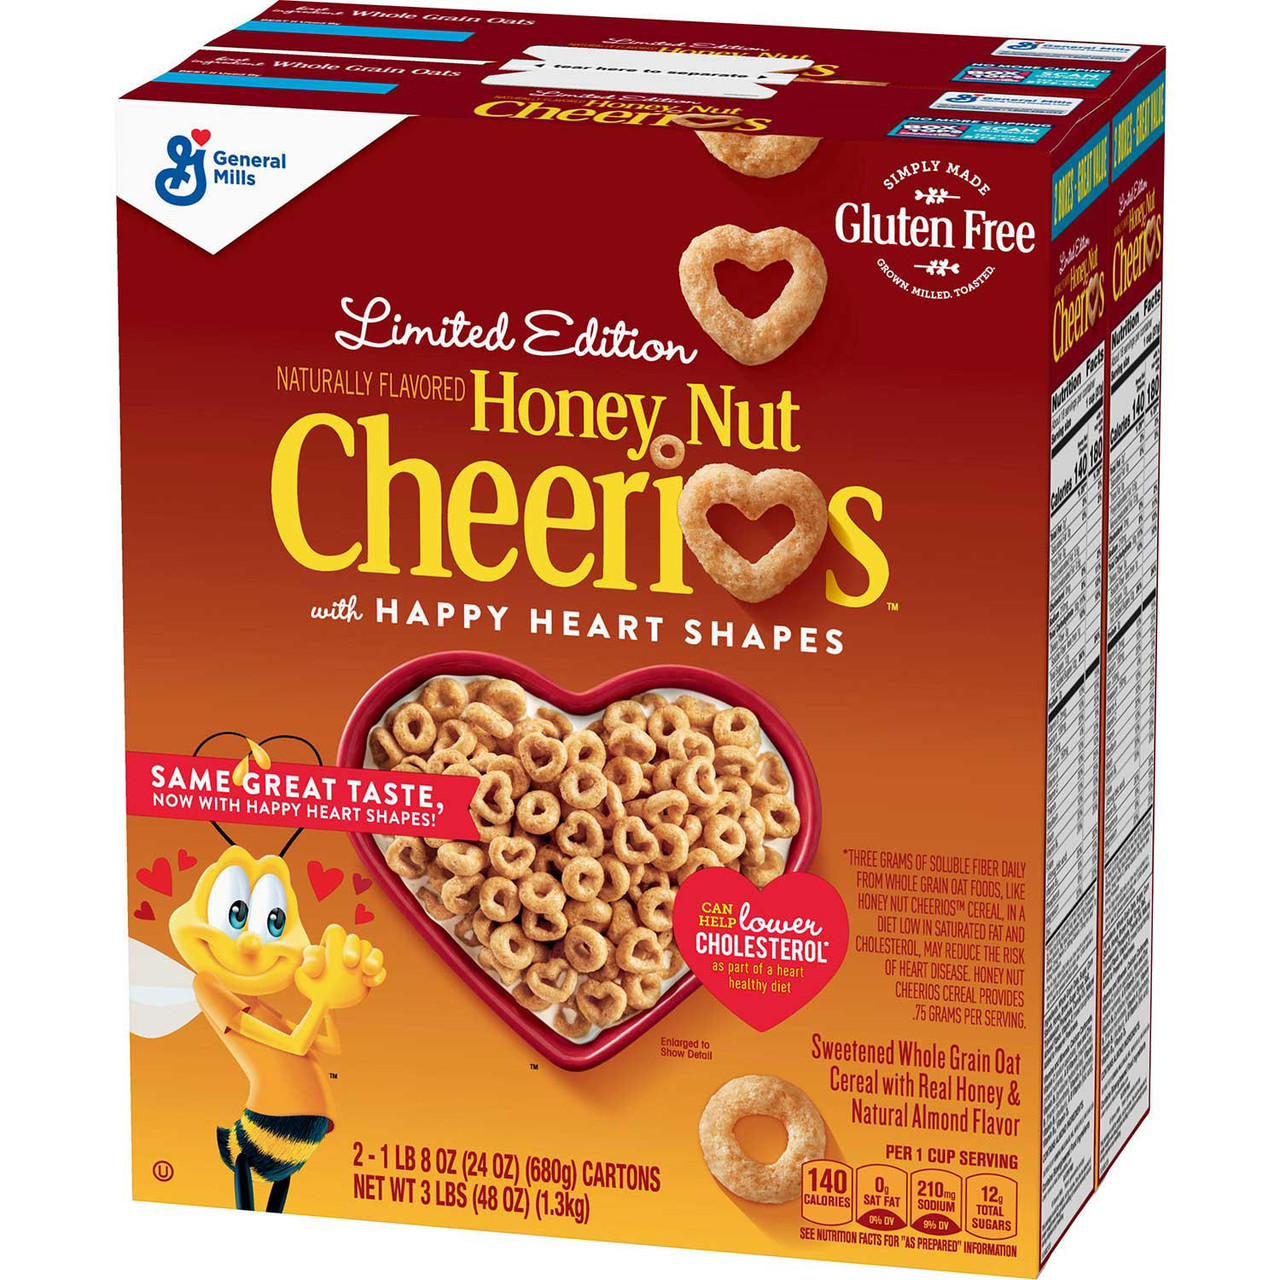 Honey Nut Cheerios Gluten-Free Cereal (24 oz., 2 pk.) - *In Store